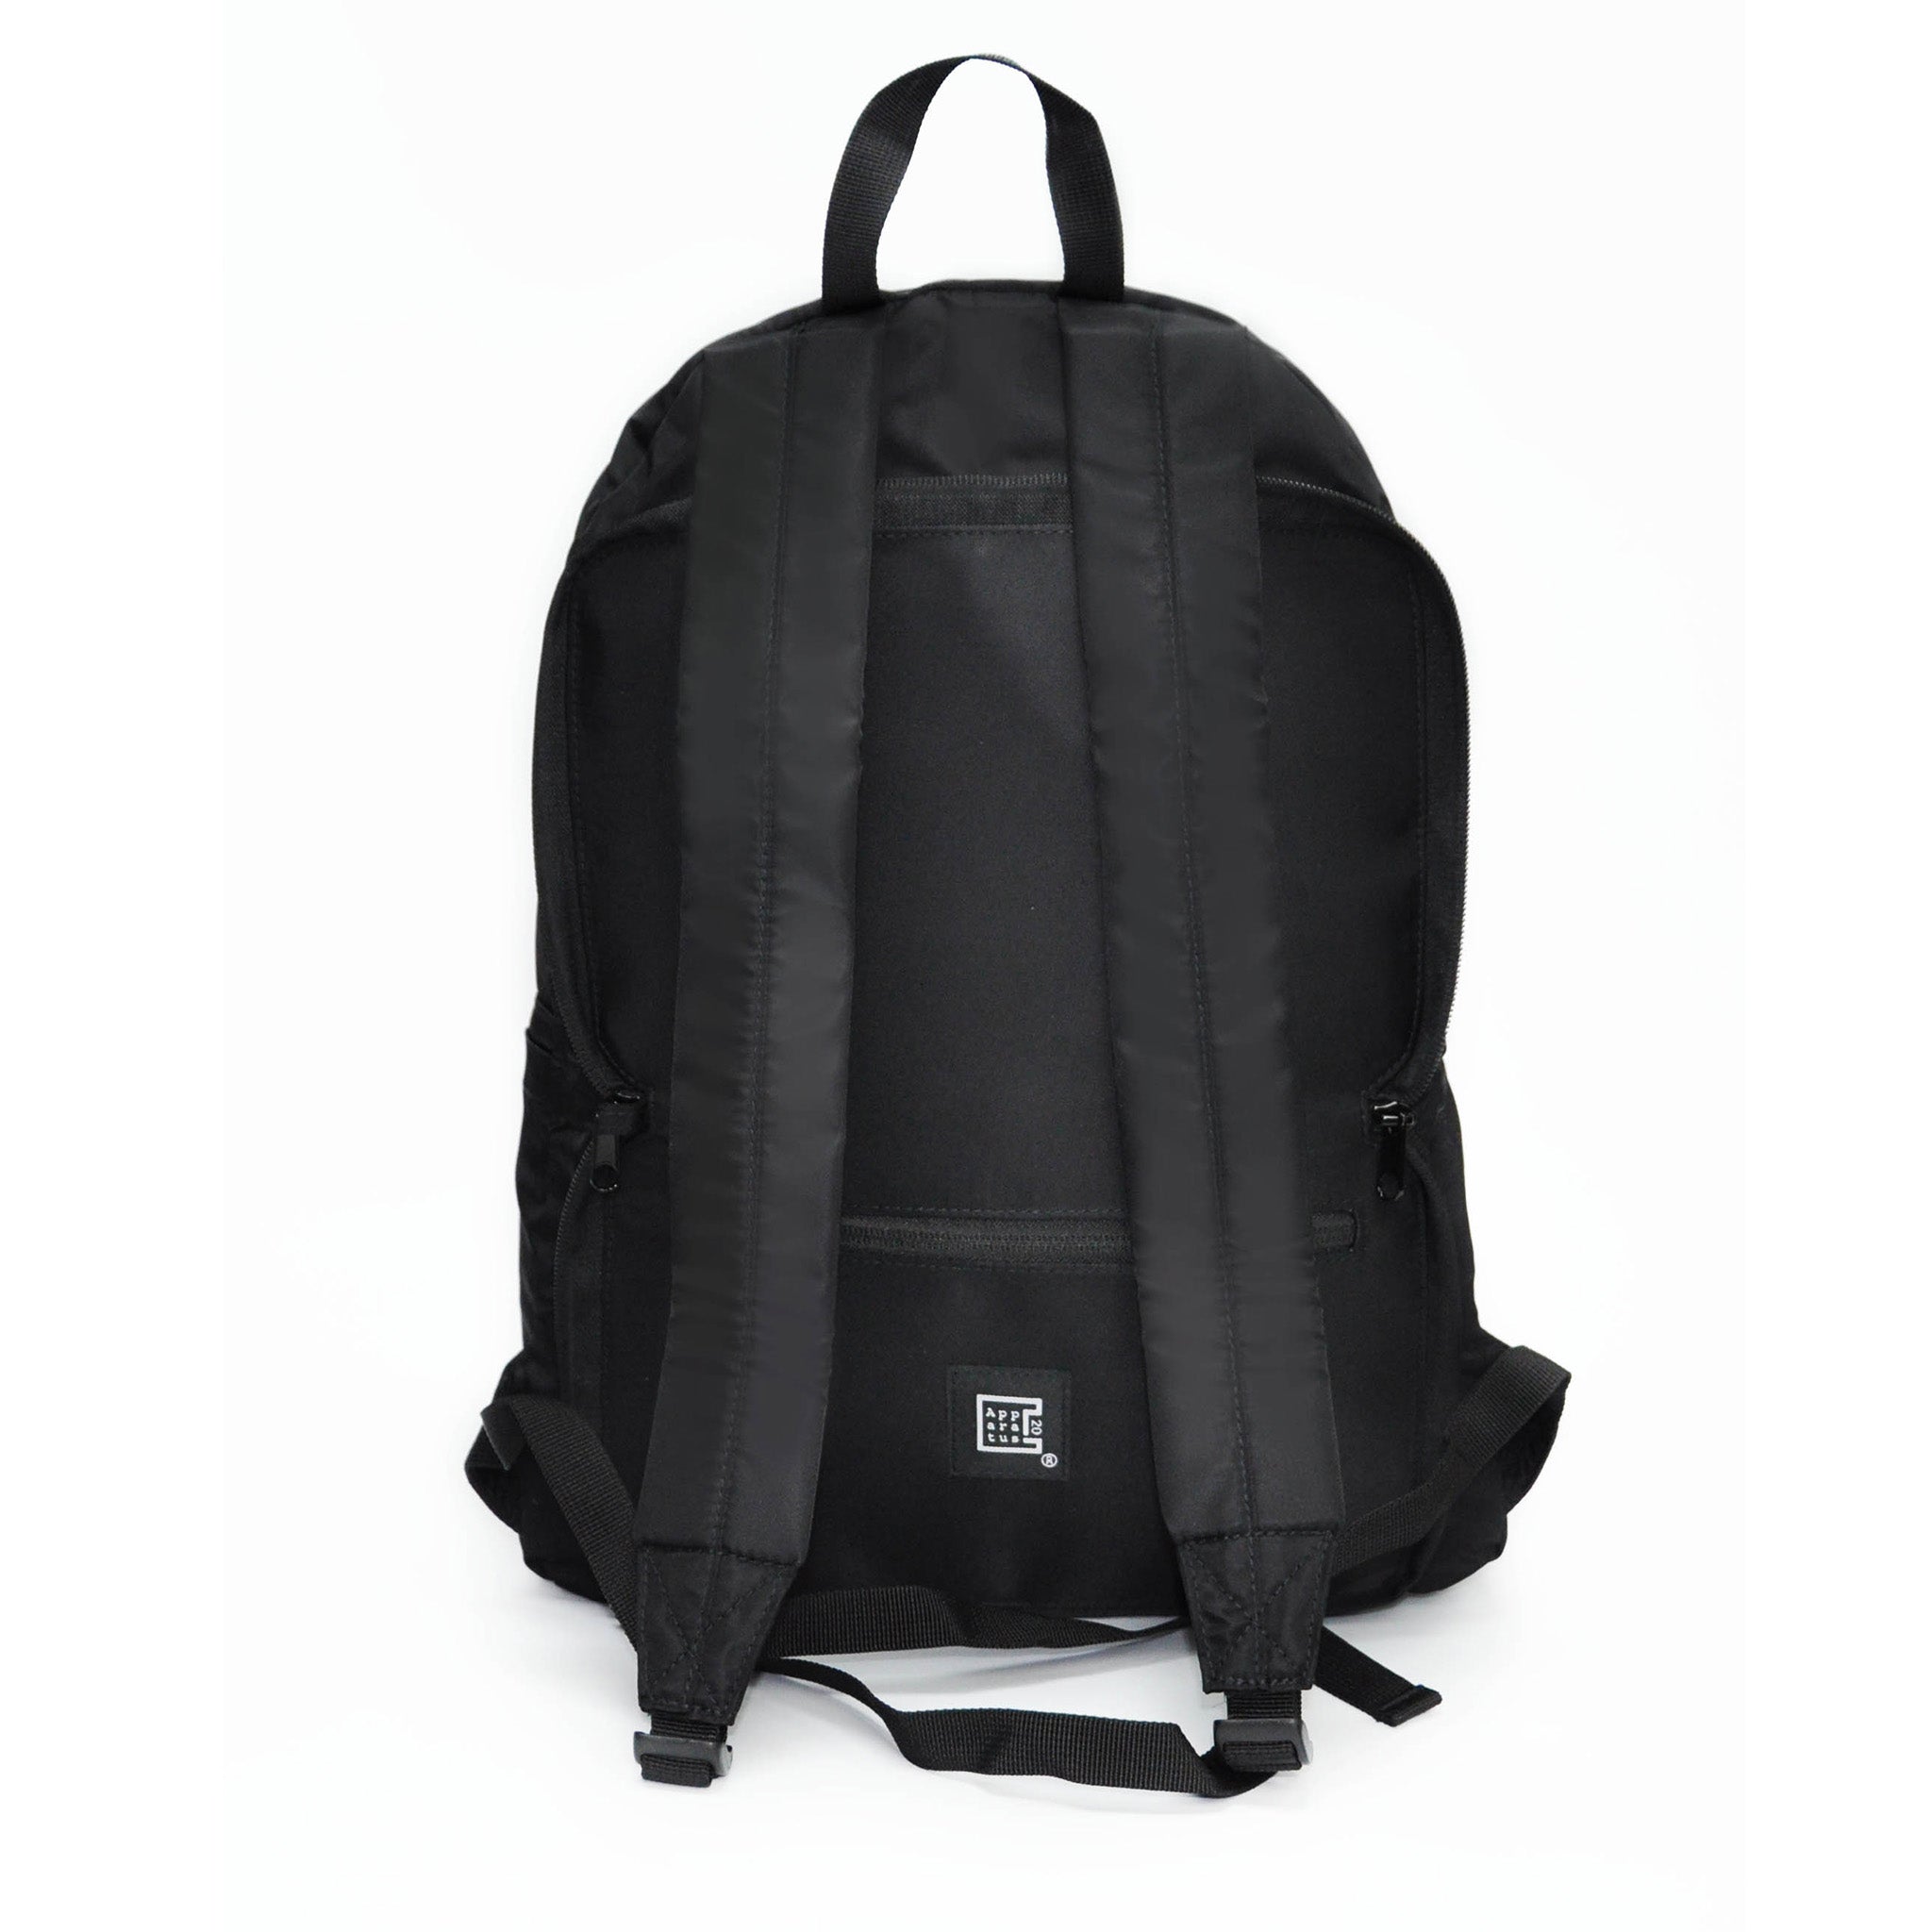 Foldable Backpack